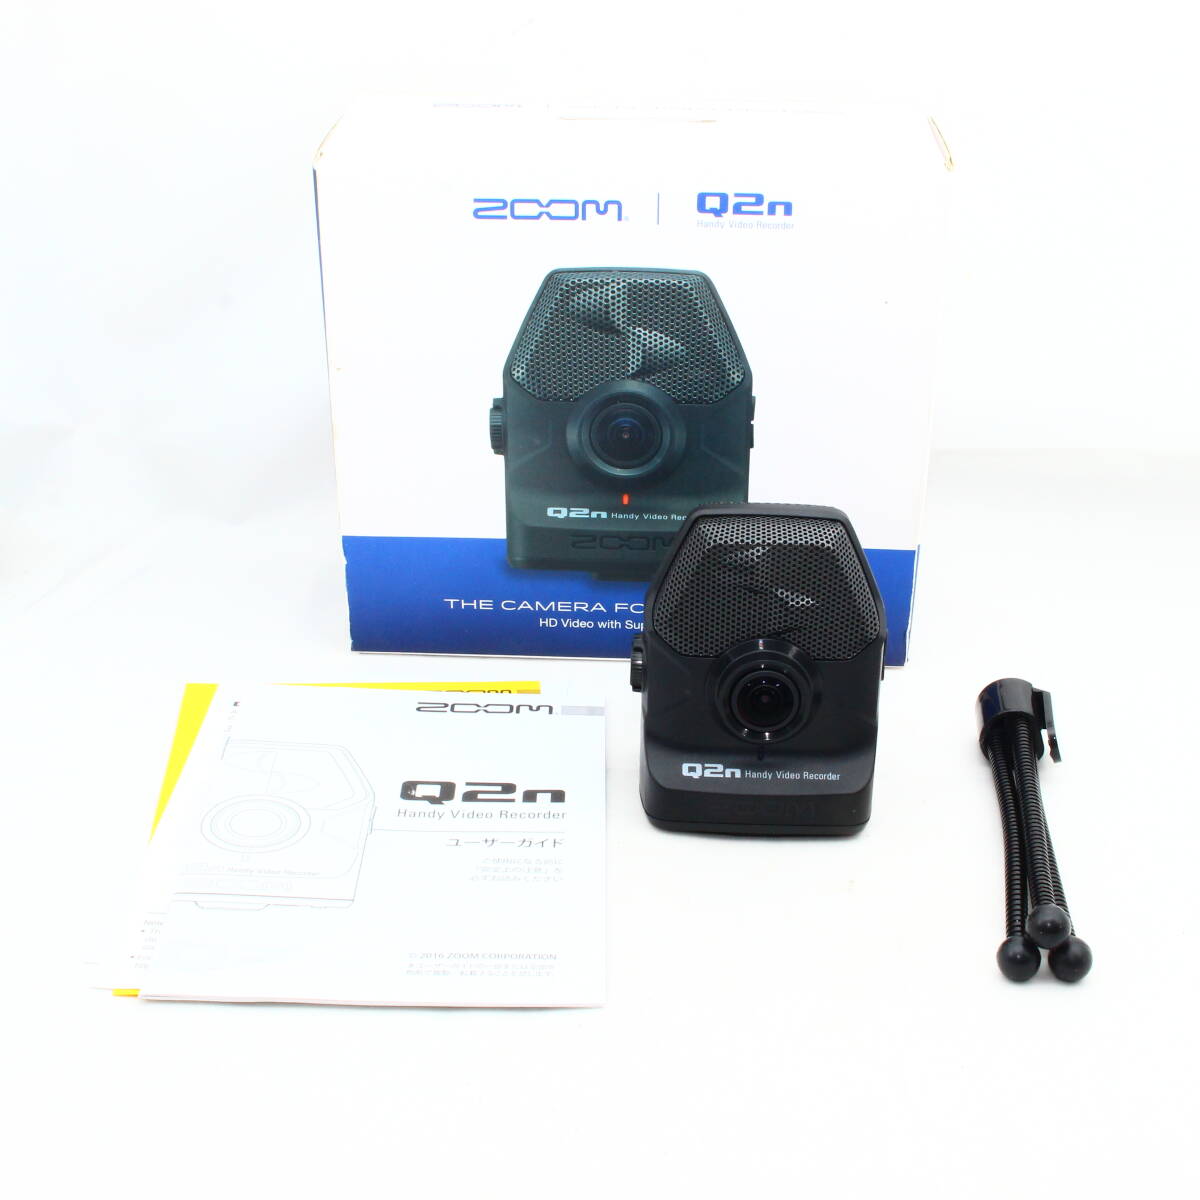 ZOOM ズーム ハンディビデオレコーダー ハイレゾ音質 Q2n-4K #2403025